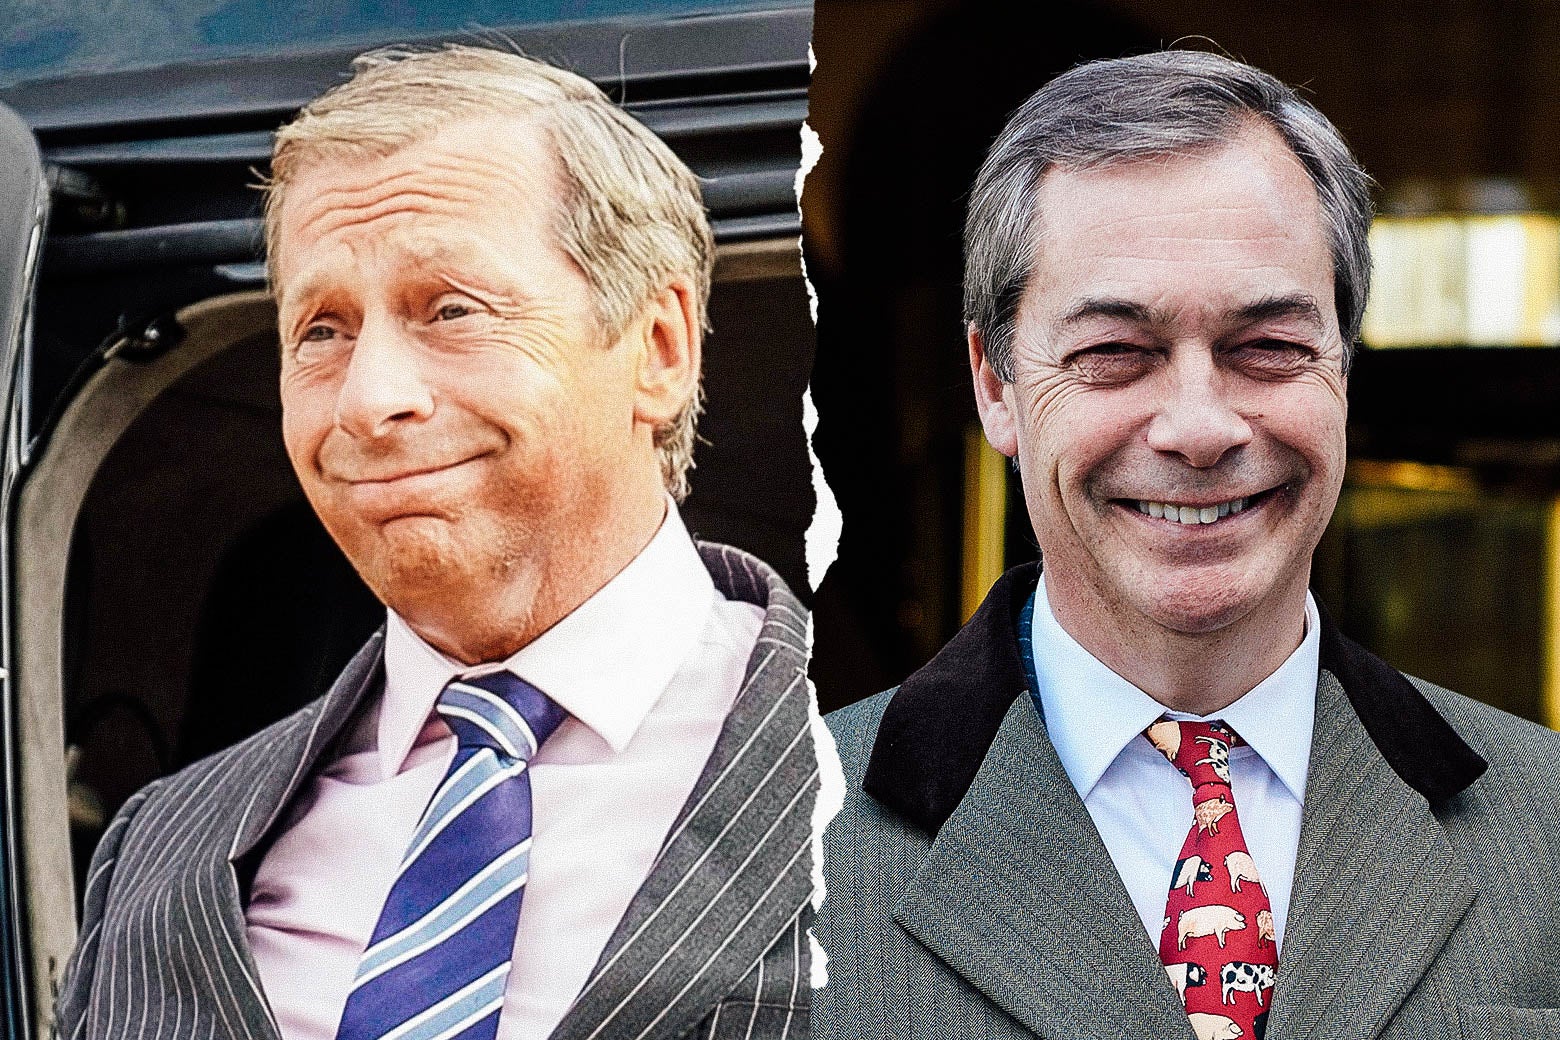 Paul Ryan as Nigel Farage, and the real Nigel Farage.